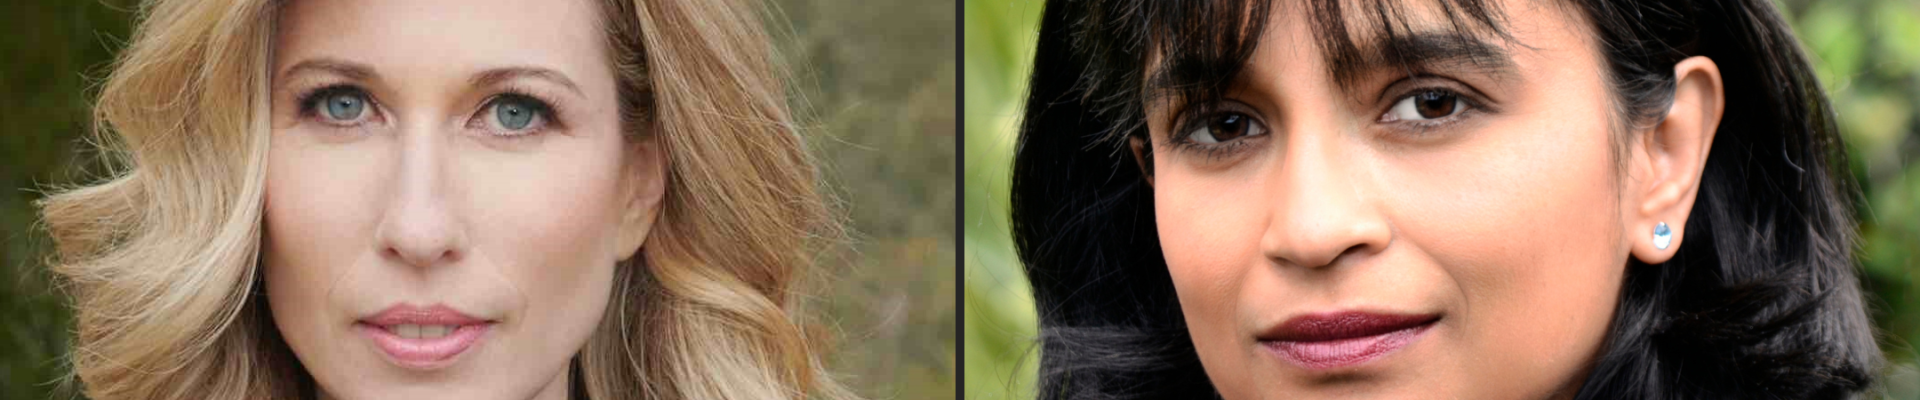 on the left is a close up photo of Natasha Lester on the right is a close up photo of Nalini Singh